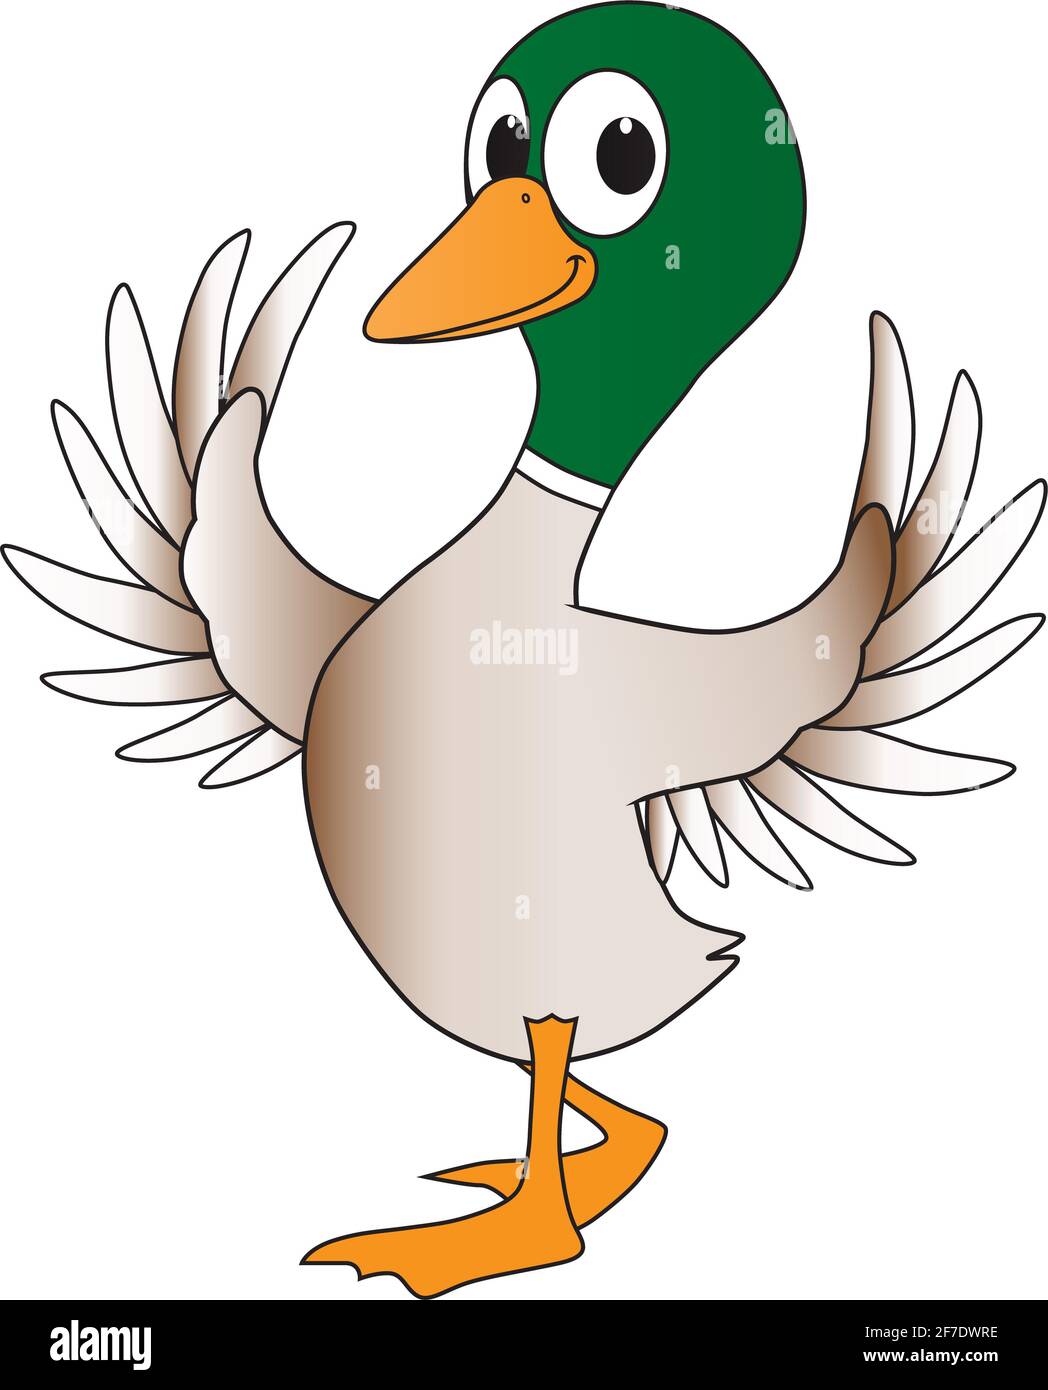 Cartoon illustration of a friendly cute duck Stock Photo - Alamy